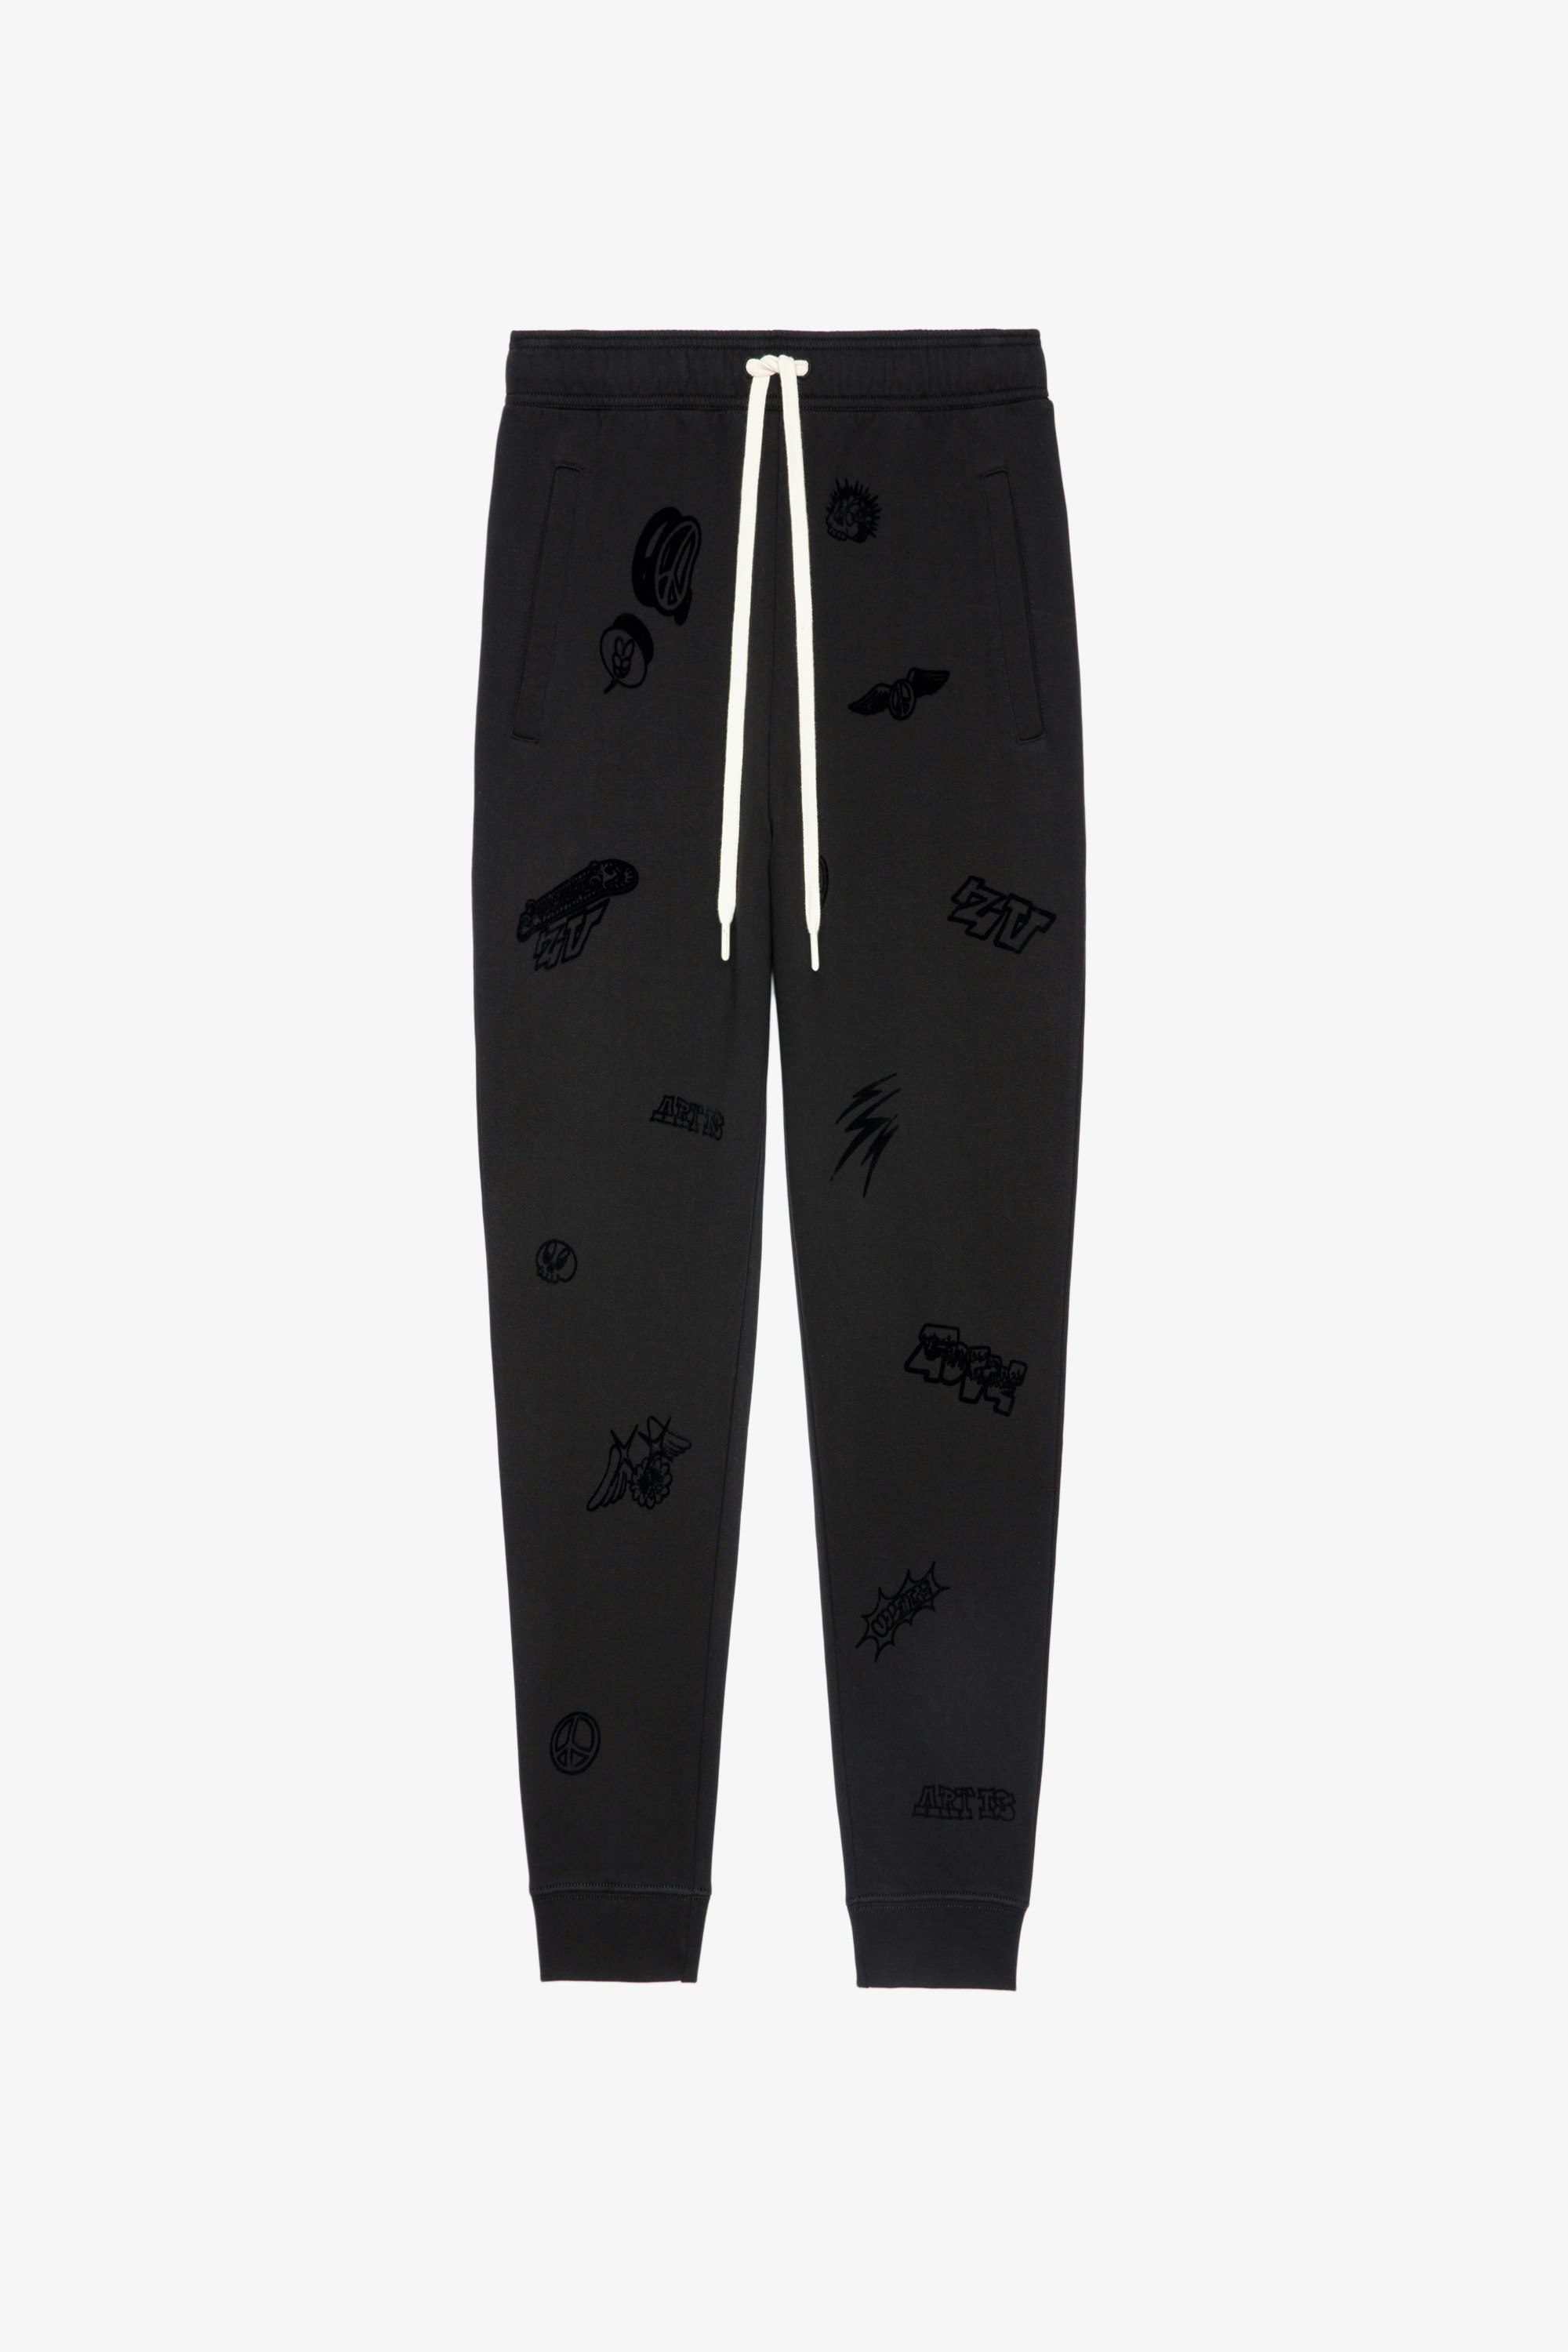 Capri Trousers Men's joggers in black cotton fleece with flocked motifs